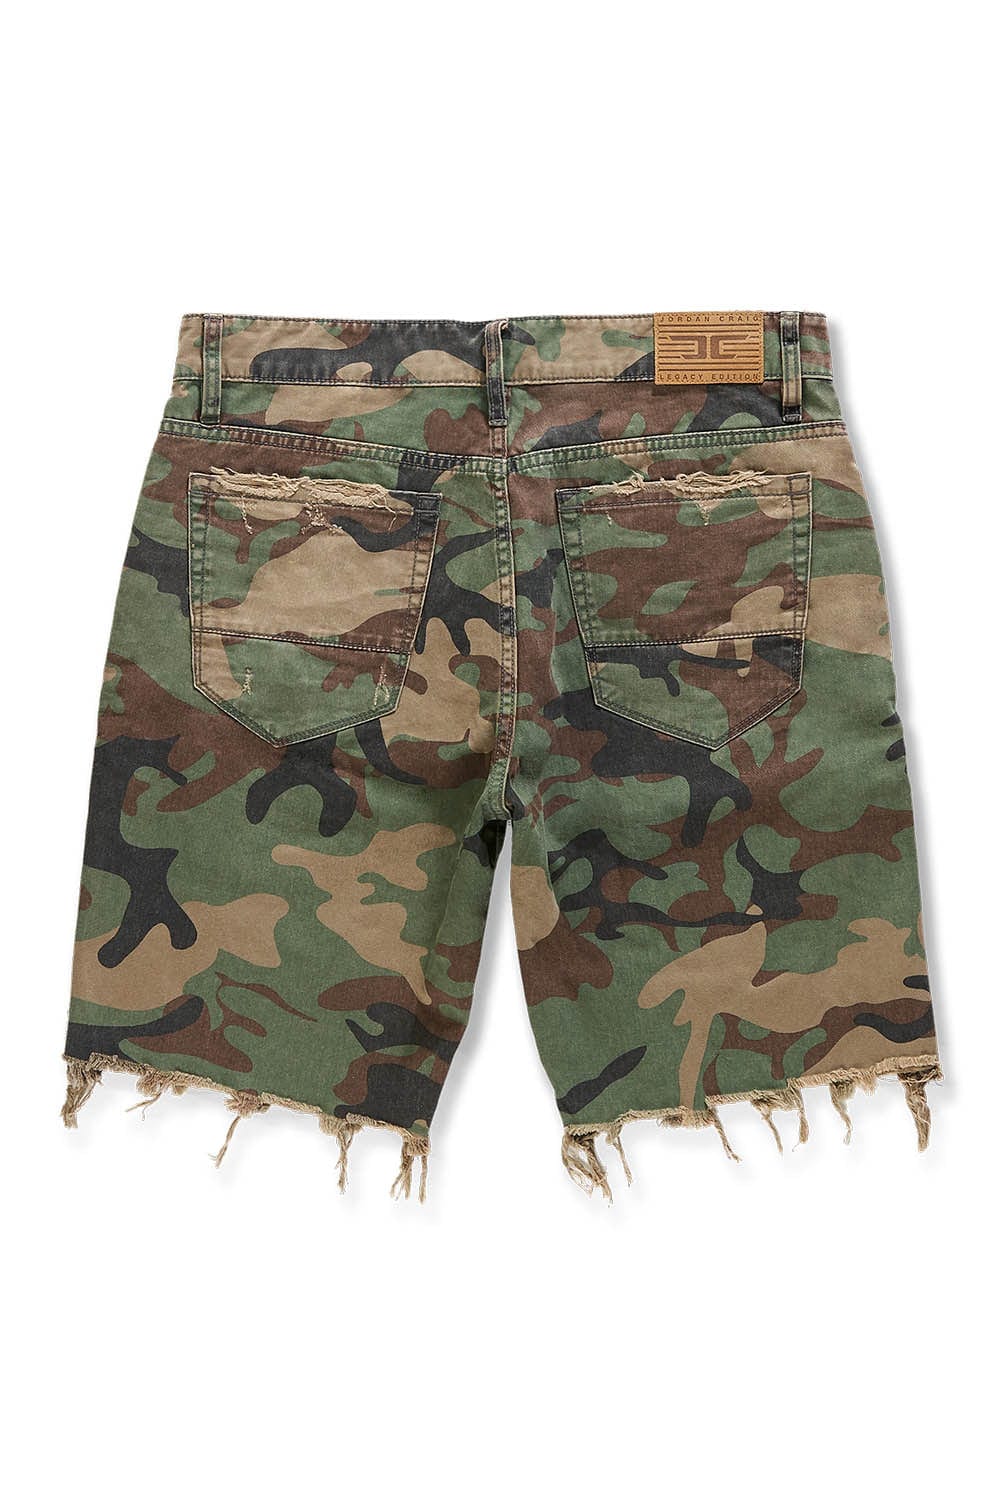 Jordan Craig Retro - Infantry Denim Shorts (Vintage Camo)